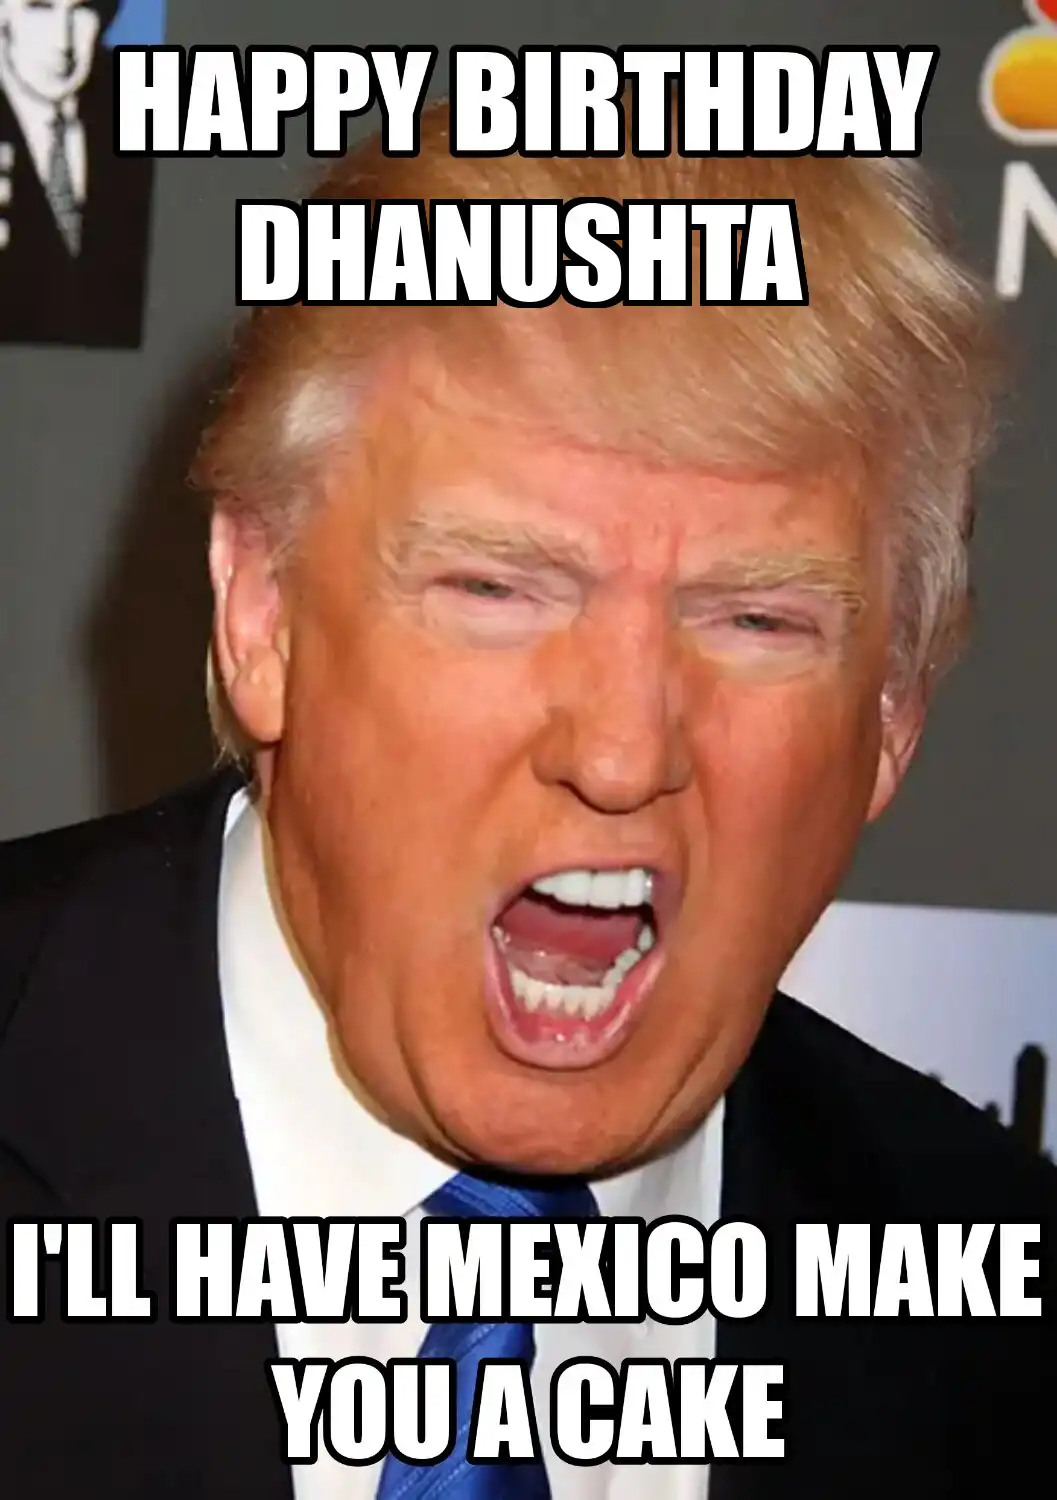 Happy Birthday Dhanushta Mexico Make You A Cake Meme